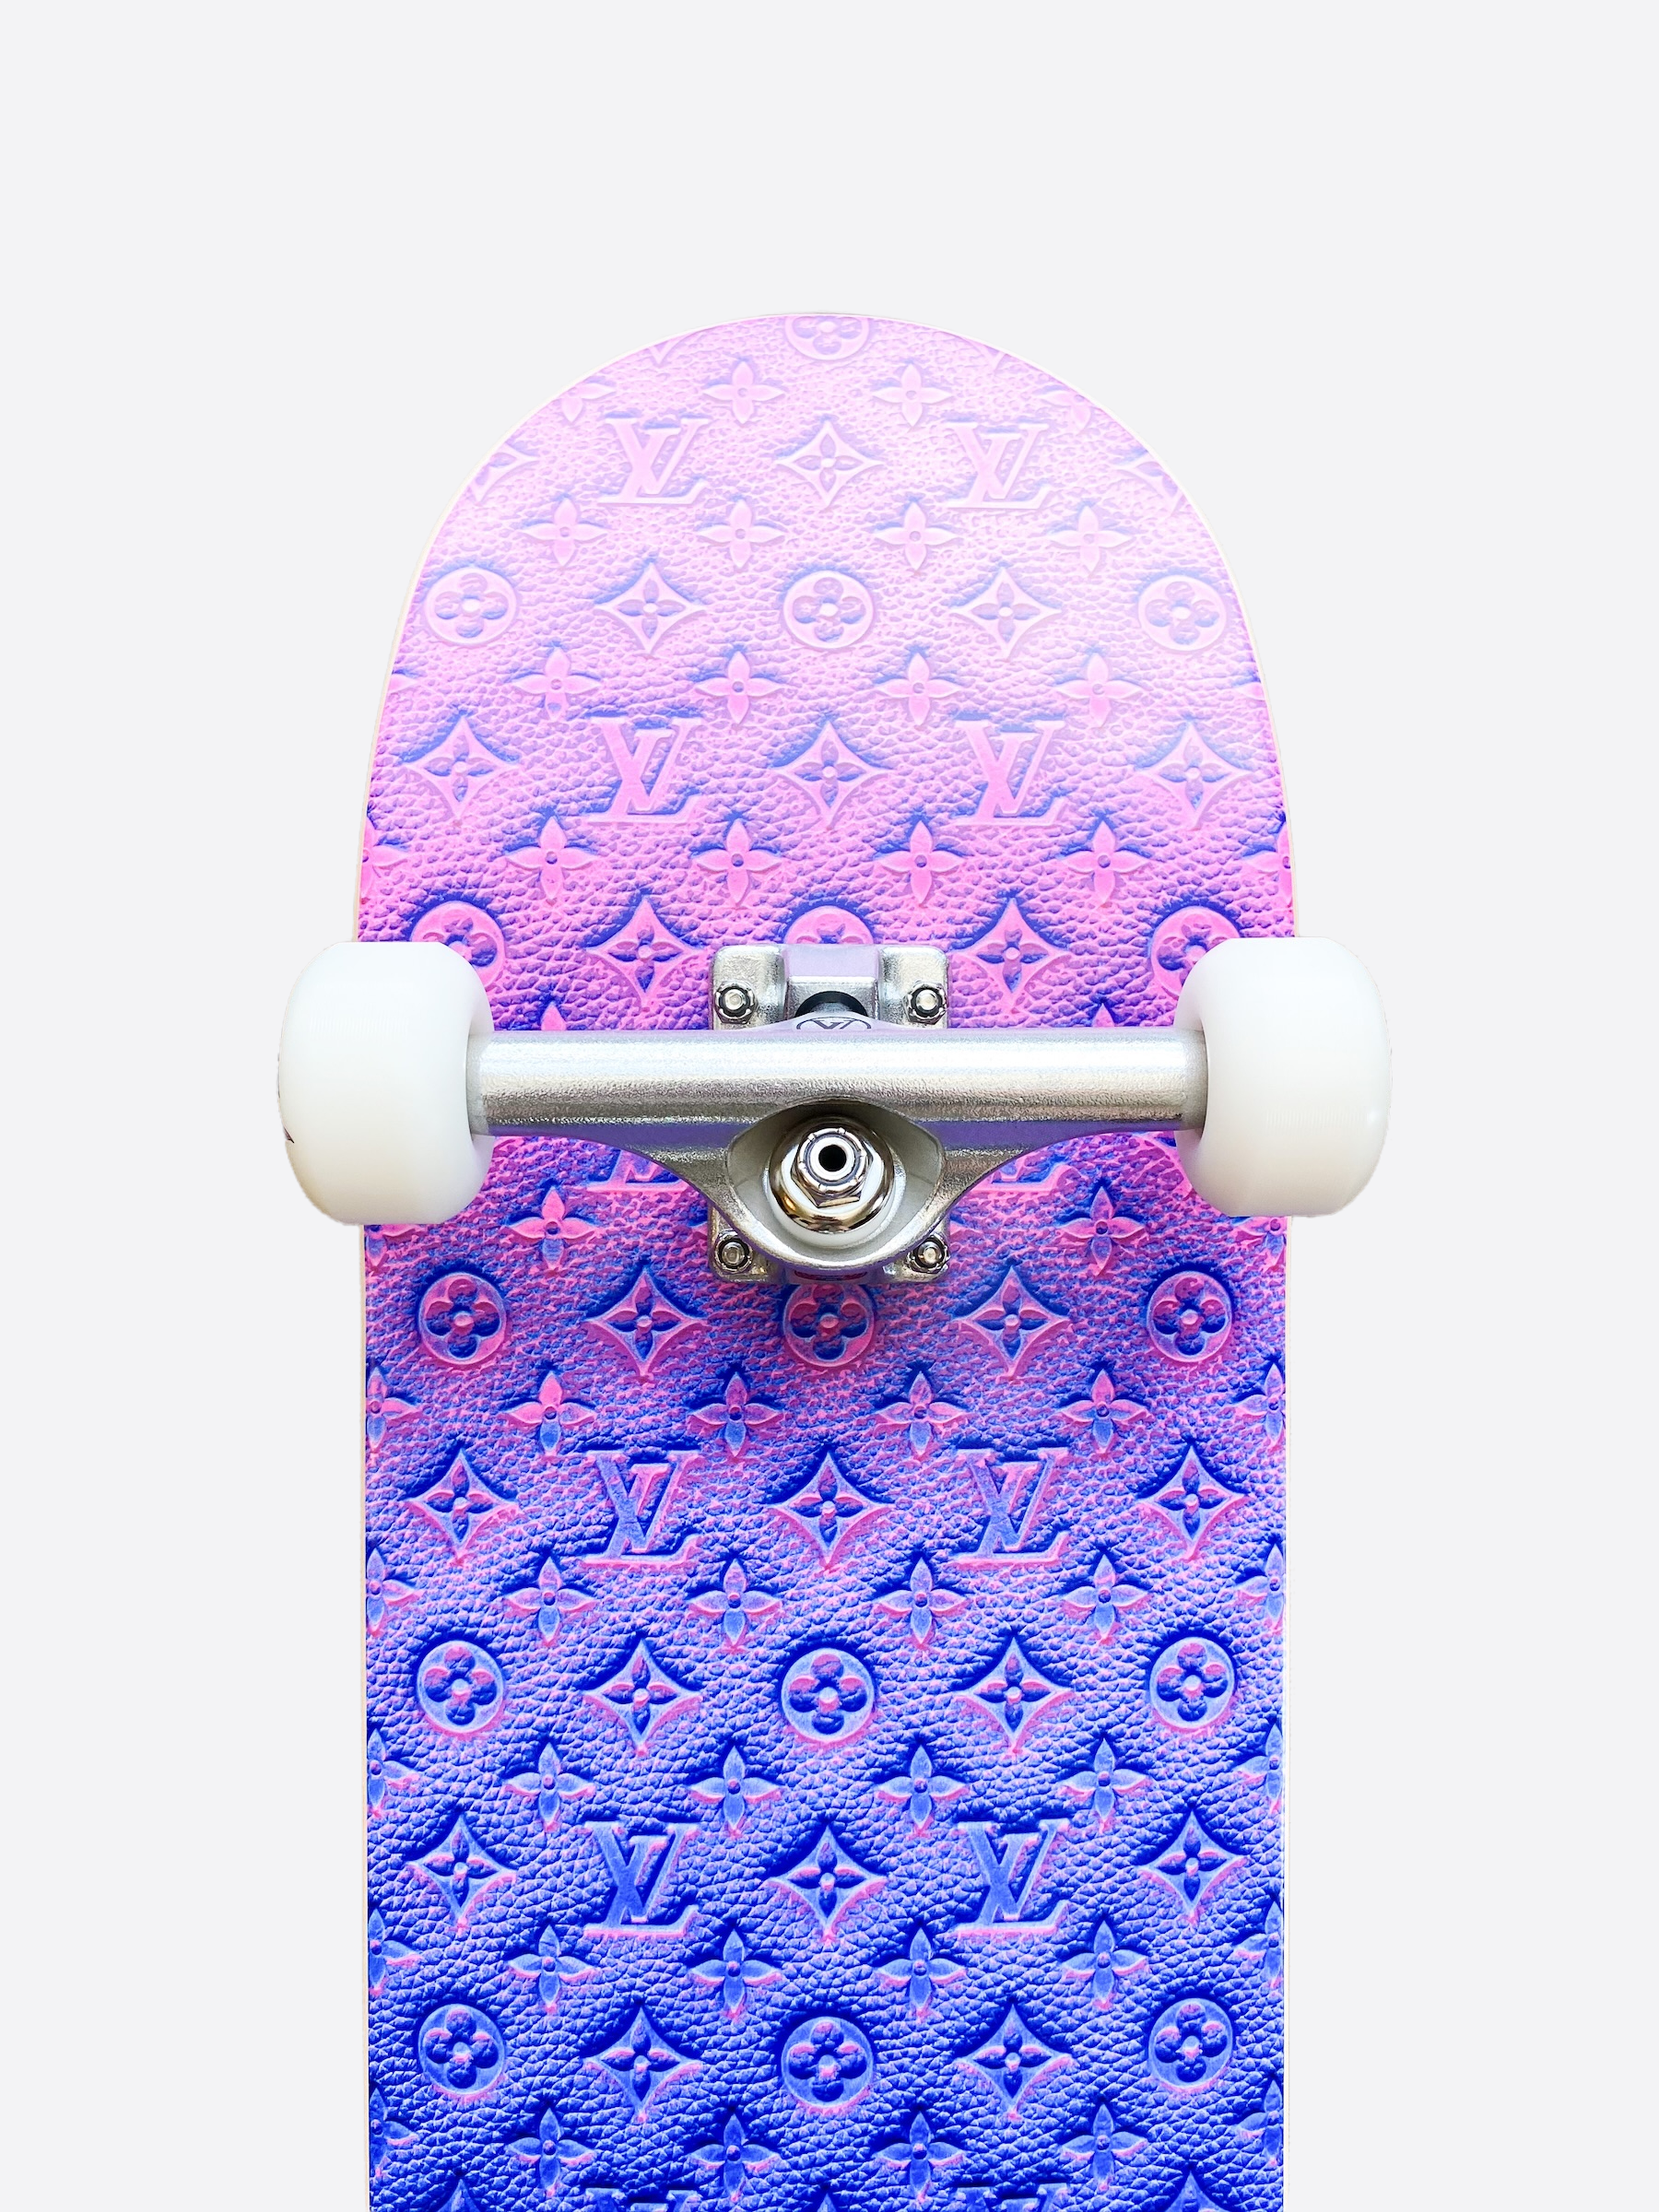 Louis Vuitton Blue Monogram Bandana Wood Skateboard QJHGAFNPBB001